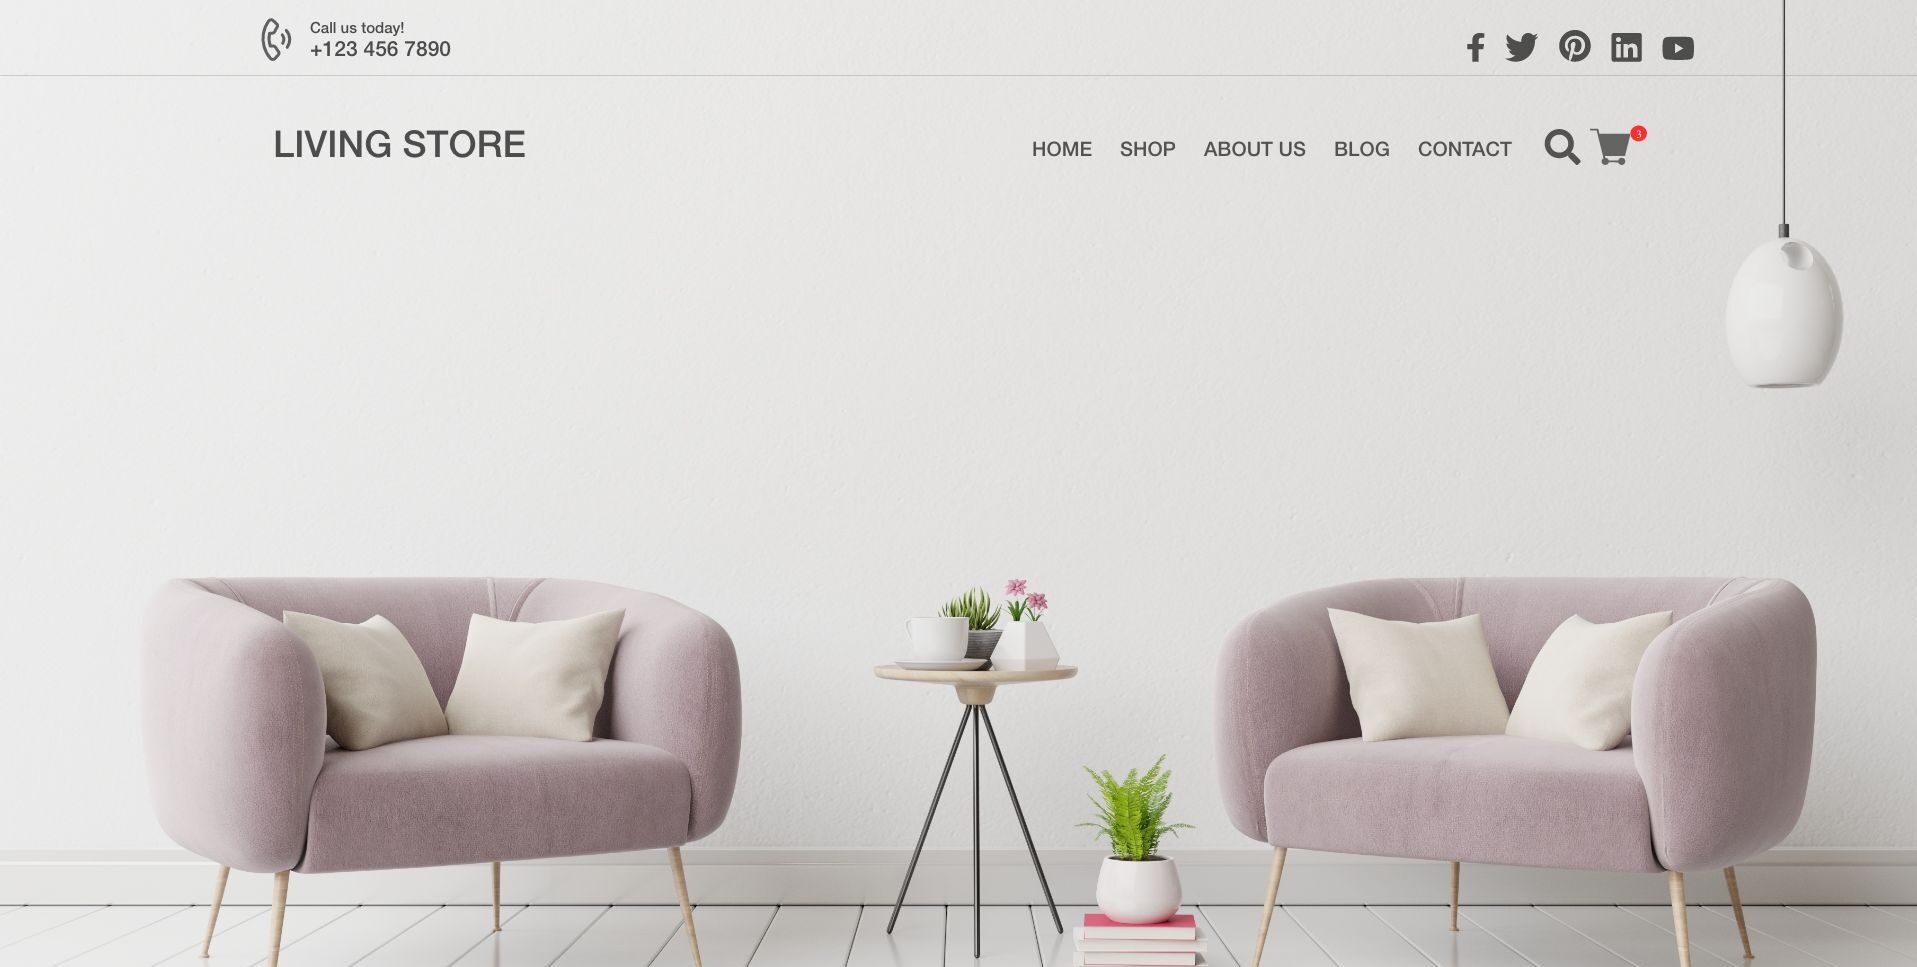 Furniture Store Website Design